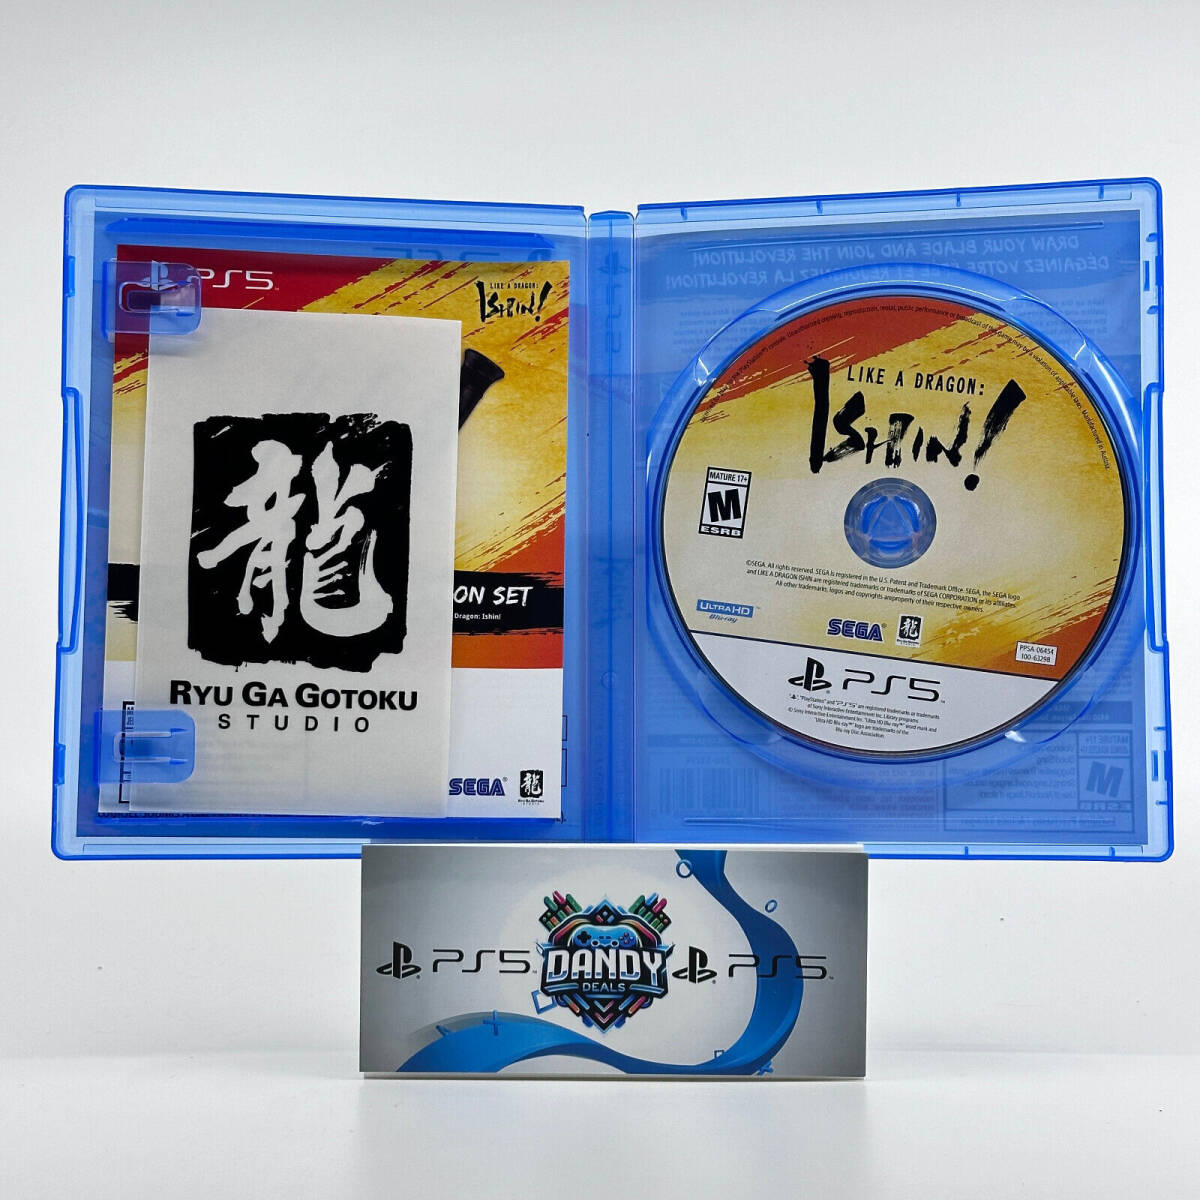 Like a Dragon: Ishin! PS5 DLC Not Redeemed, W/ Sticker - Sony PlayStation 5 海外 即決_Like a Dragon: Ish 3